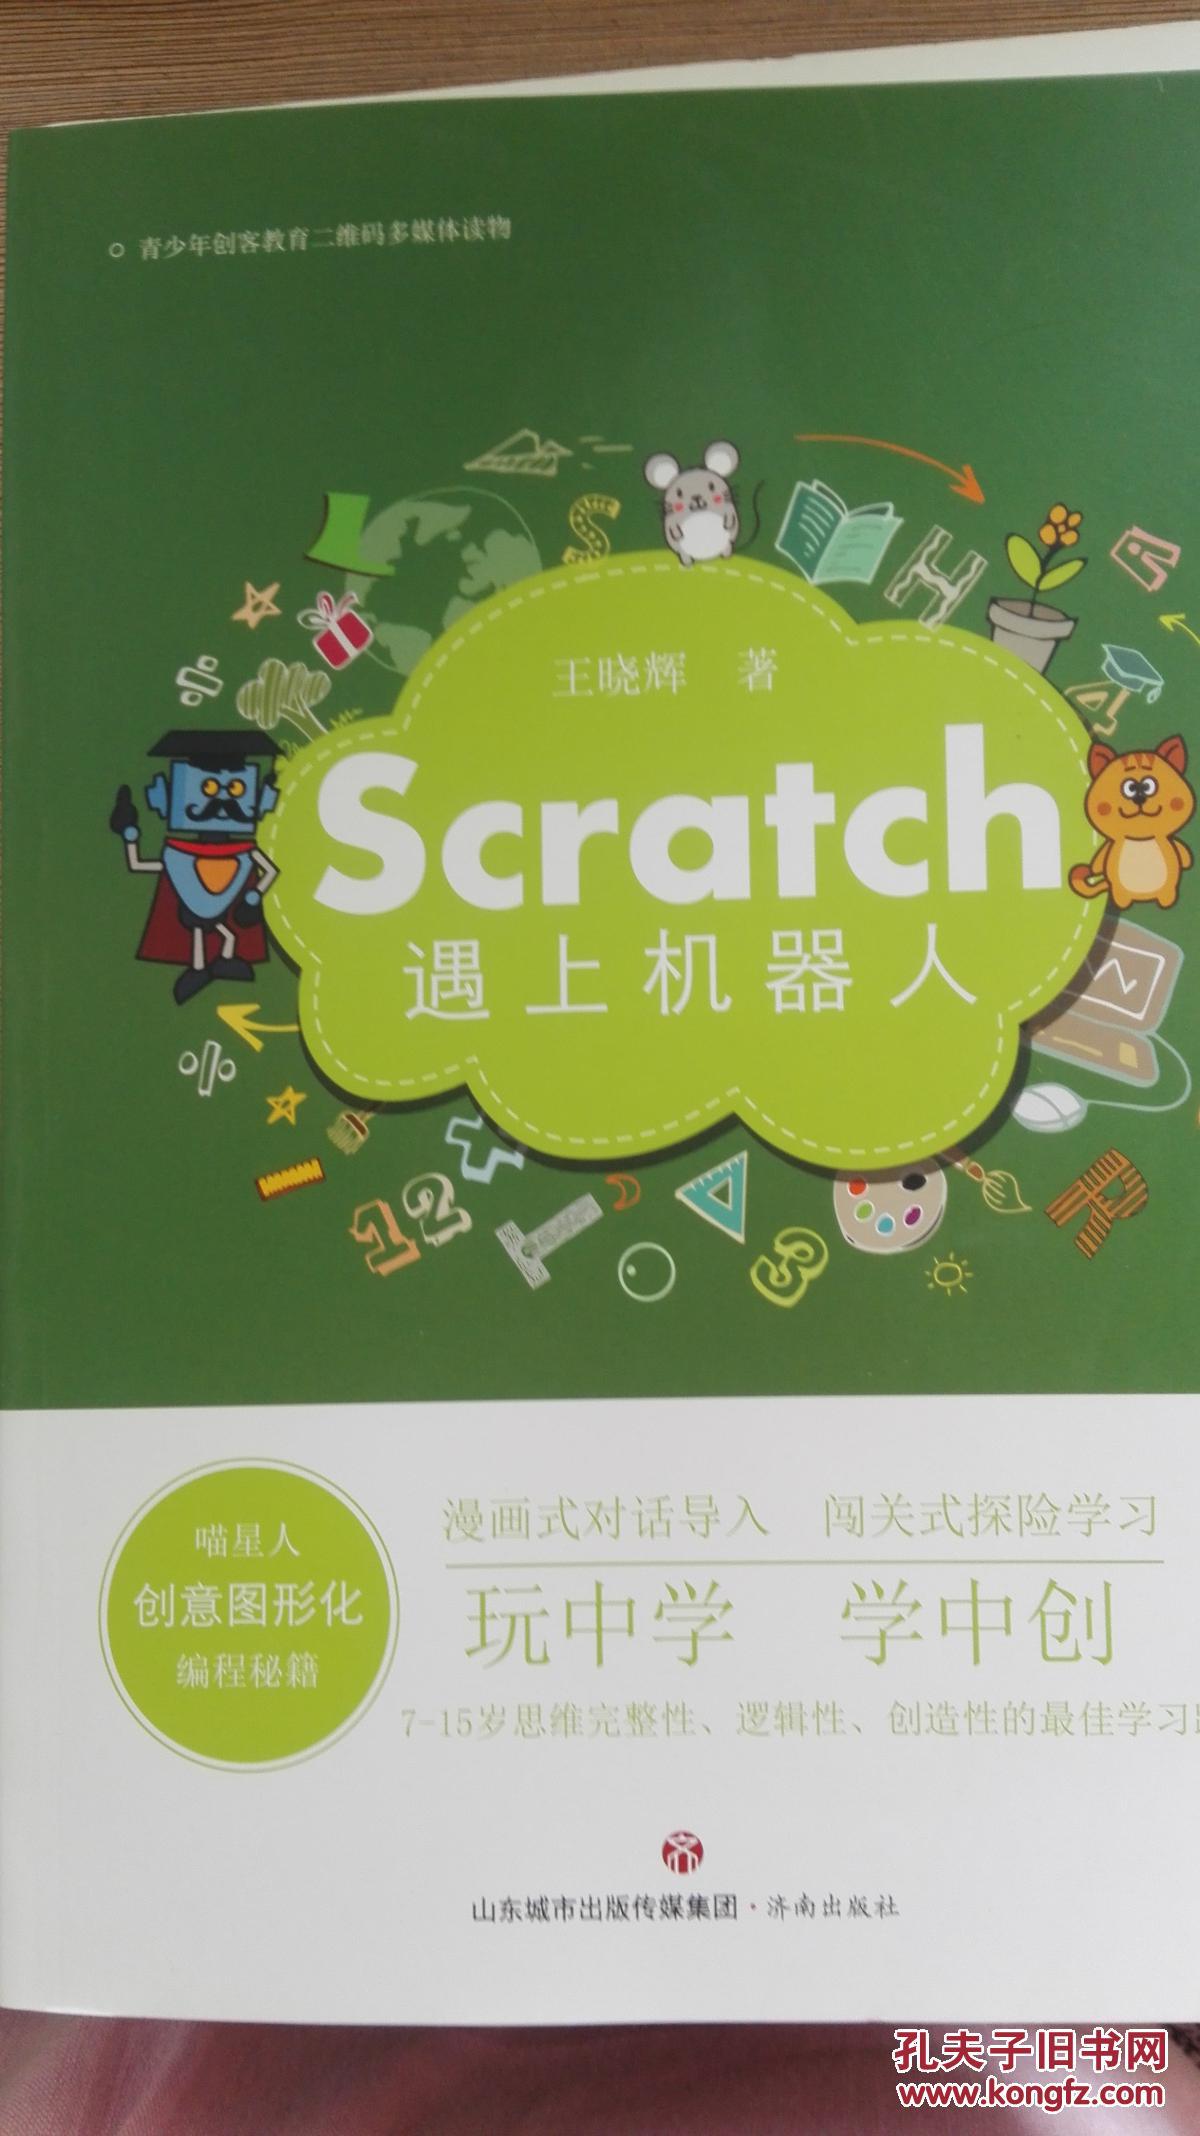 Scratch遇上机器人:喵星人创意图形化编程秘籍